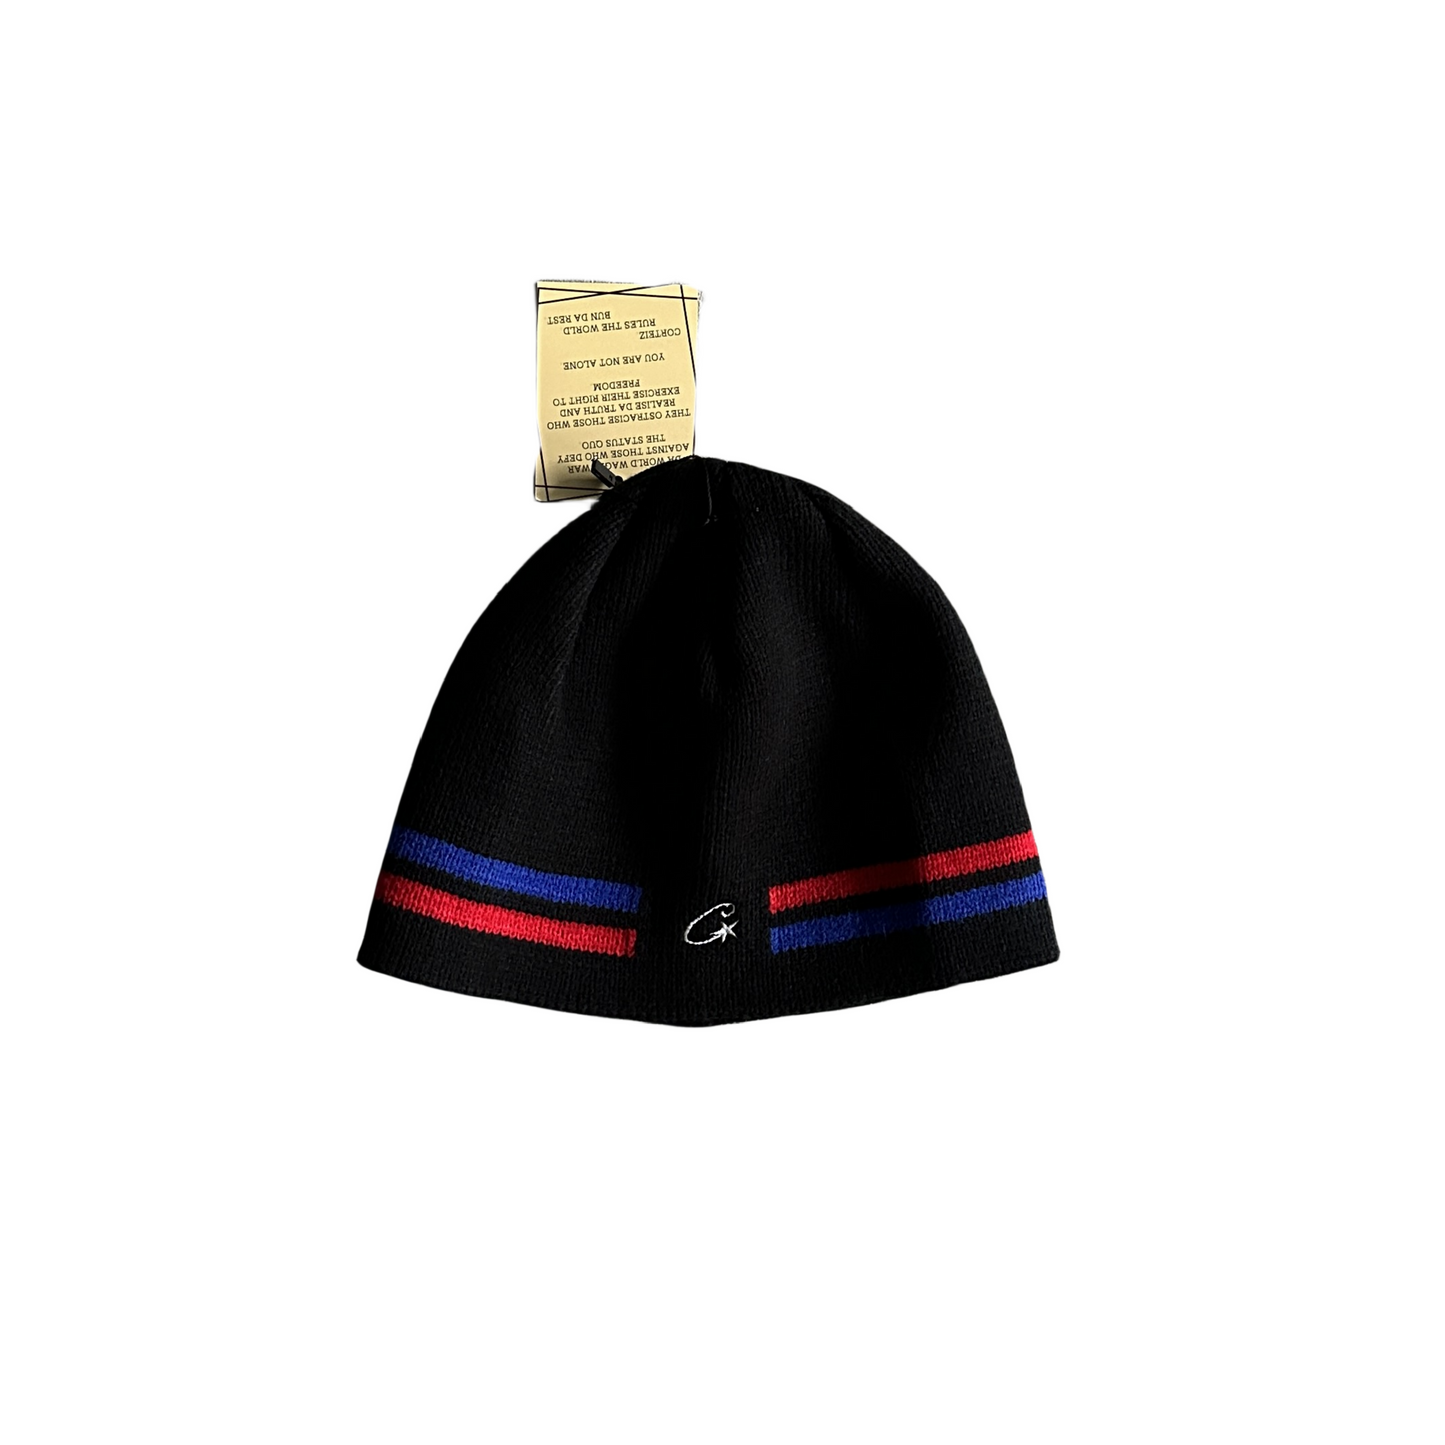 Corteiz VVS Knit Stripe Beanie Knitting Warm Cap Cold Hat - Black